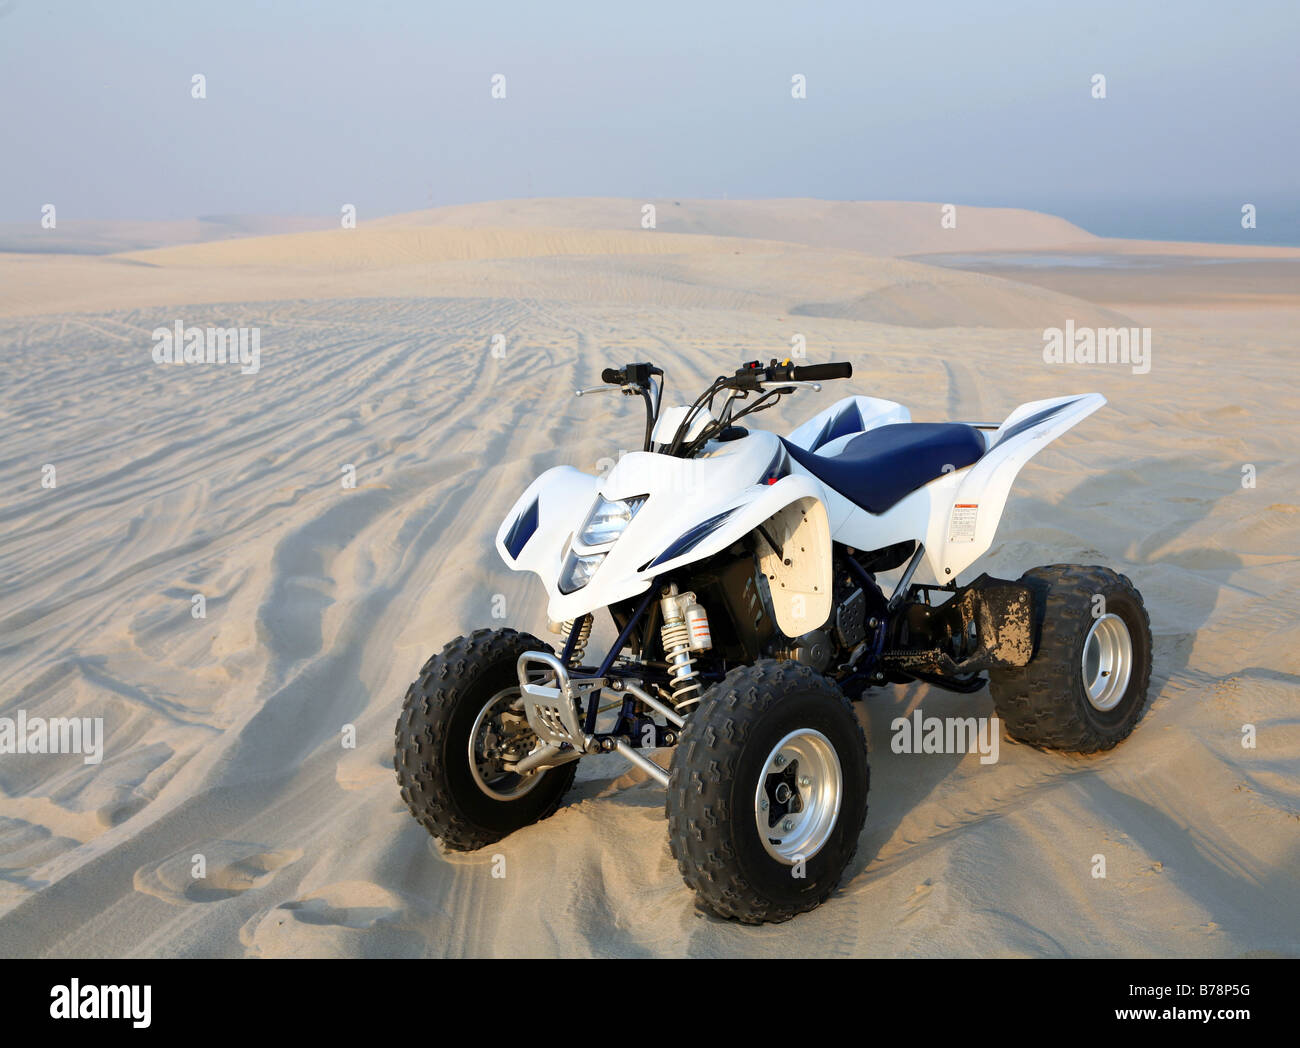 A quad bike in the middle of the Qatari desert Stock Photo - Alamy